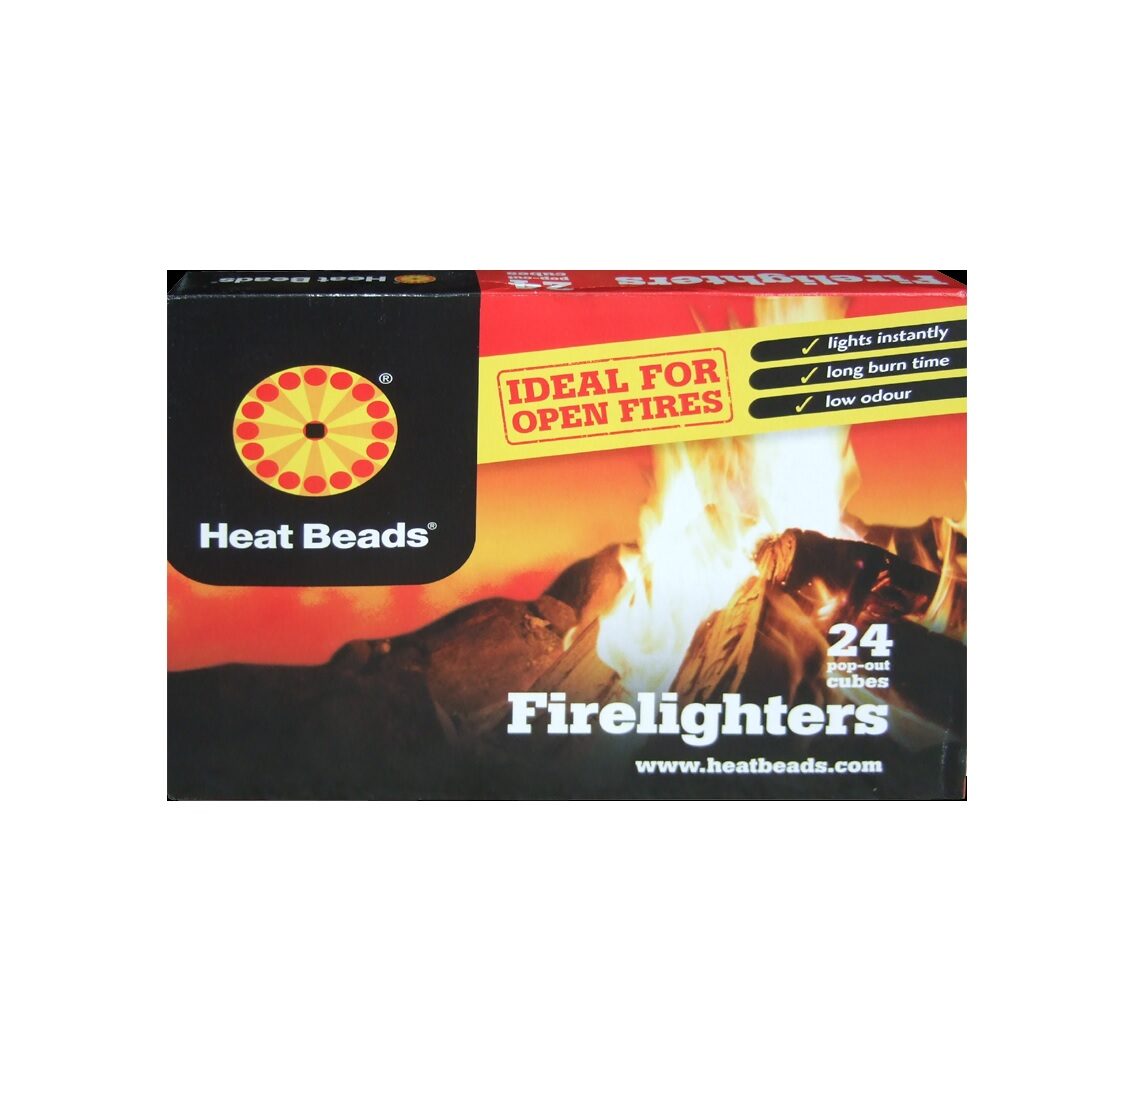 Heat beads firelighters